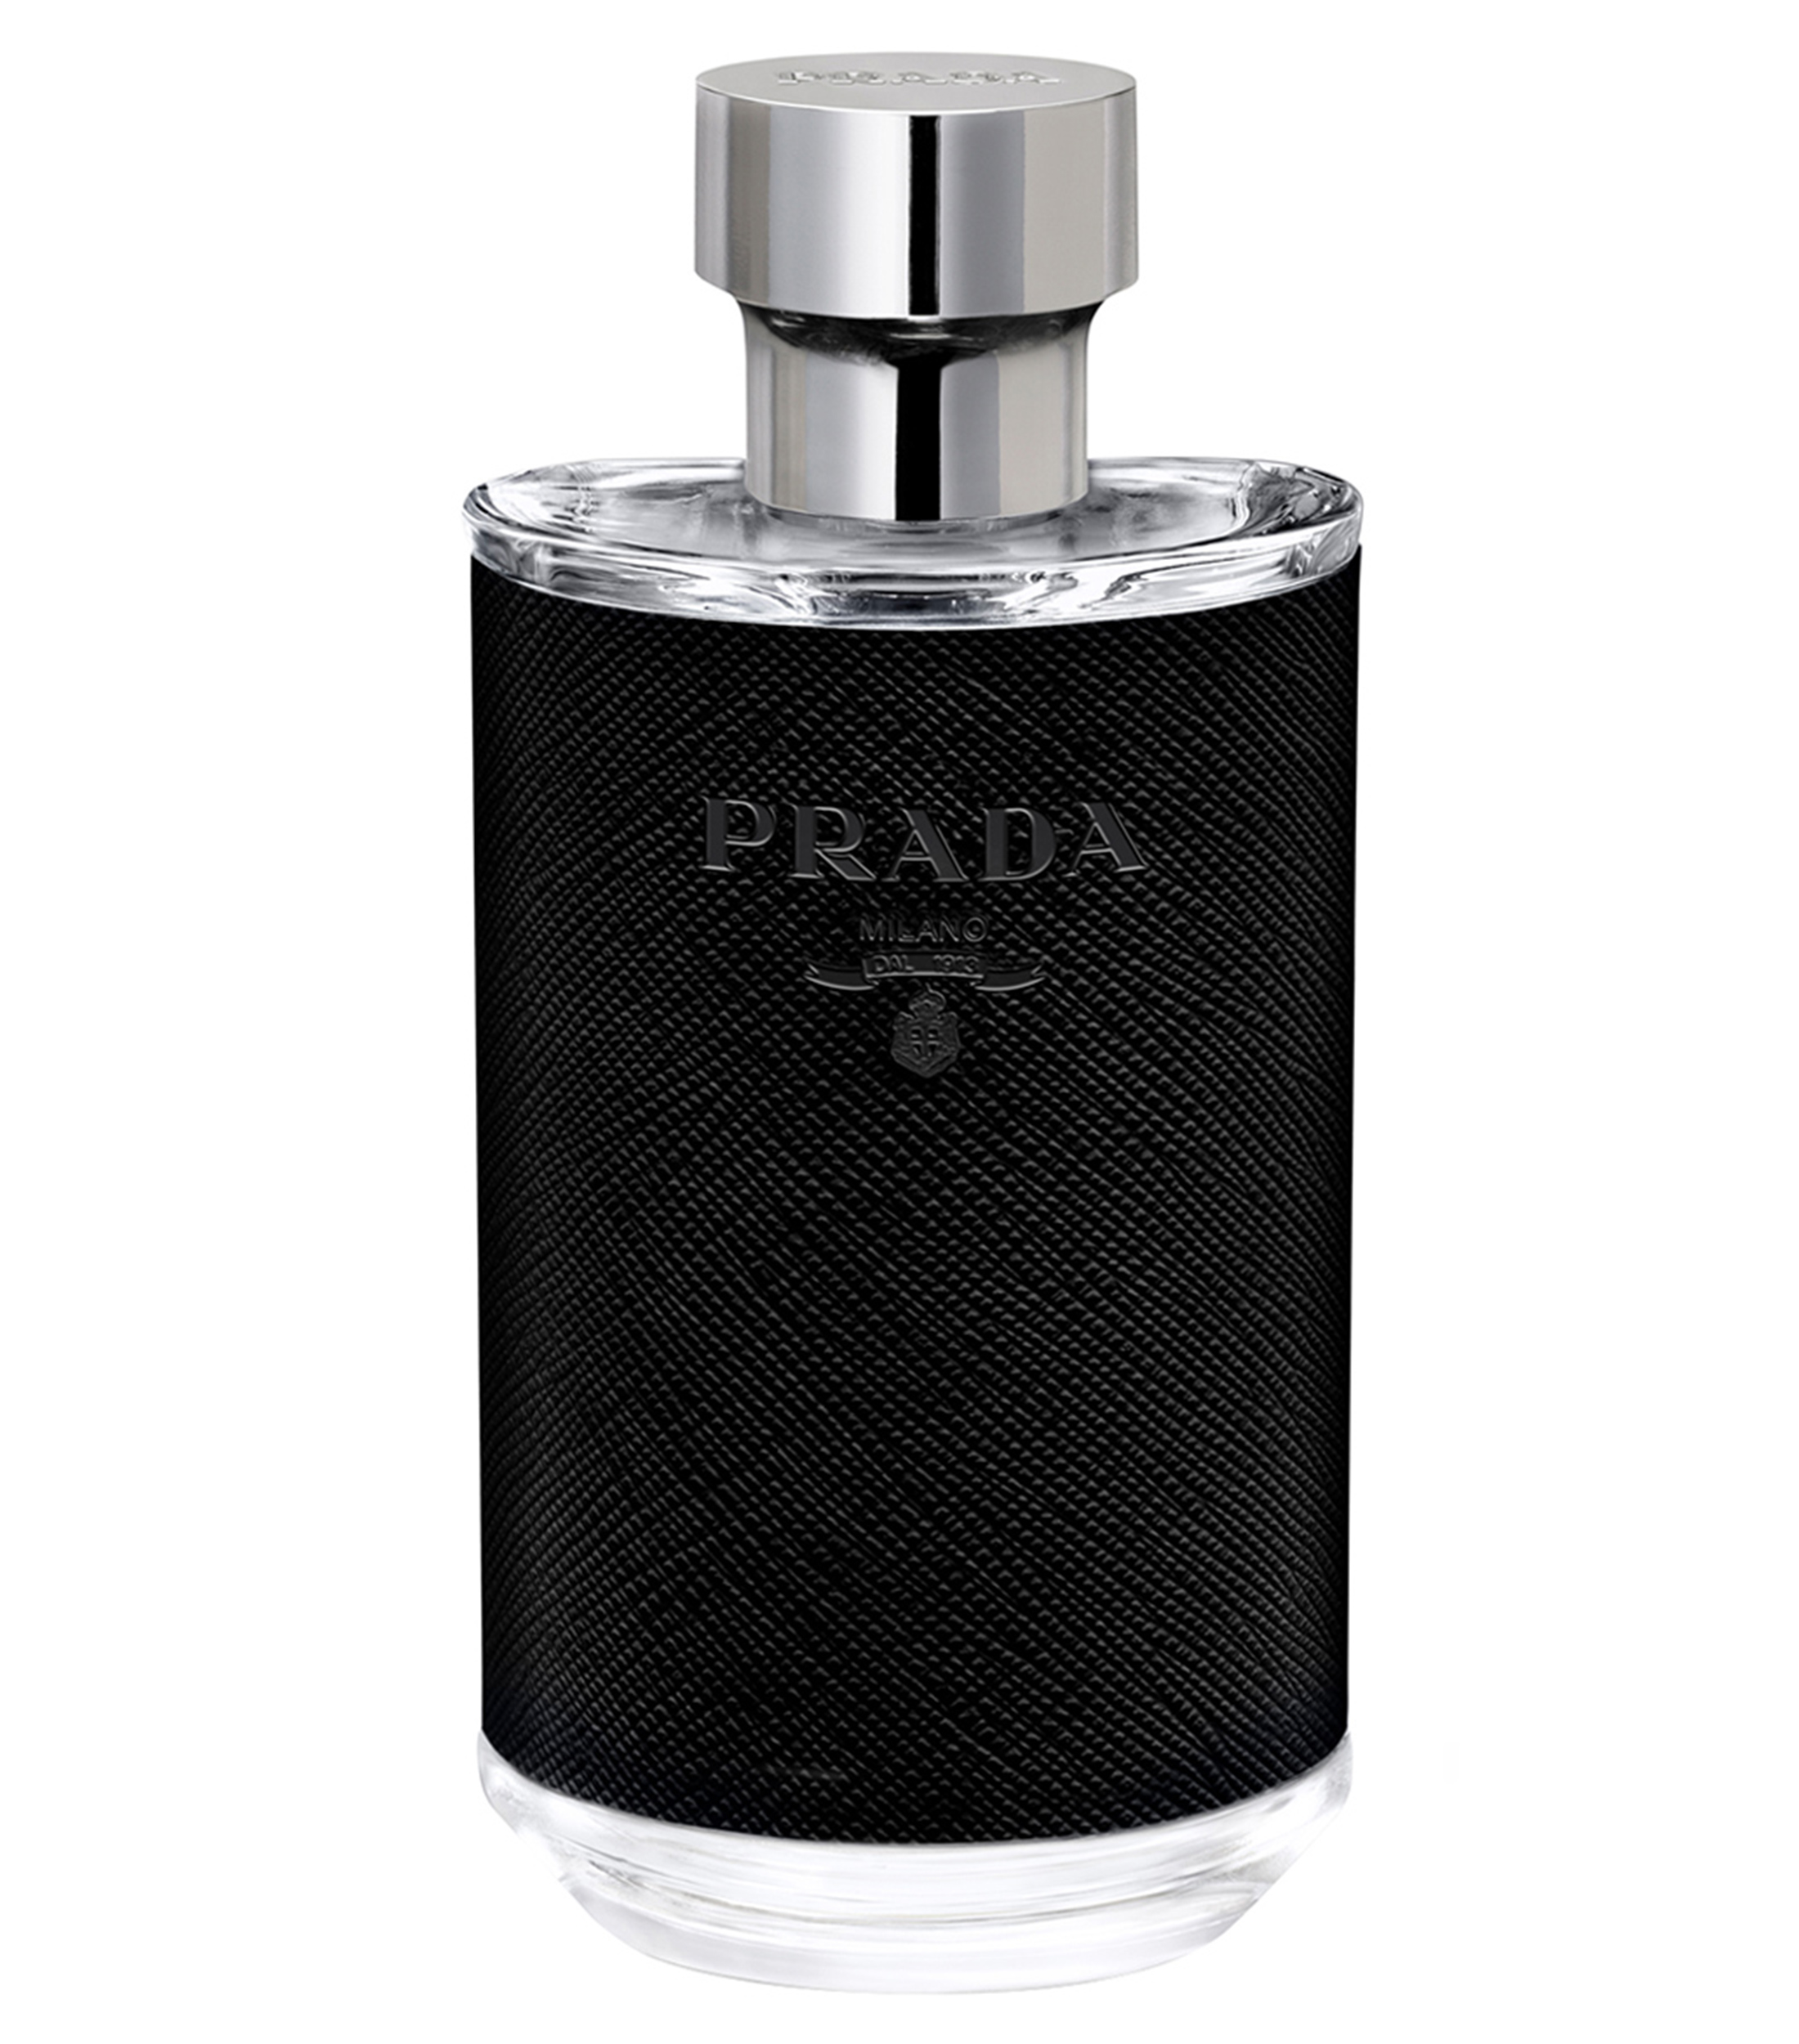 Arriba 34+ imagen perfume prada hombre nuevo - Abzlocal.mx